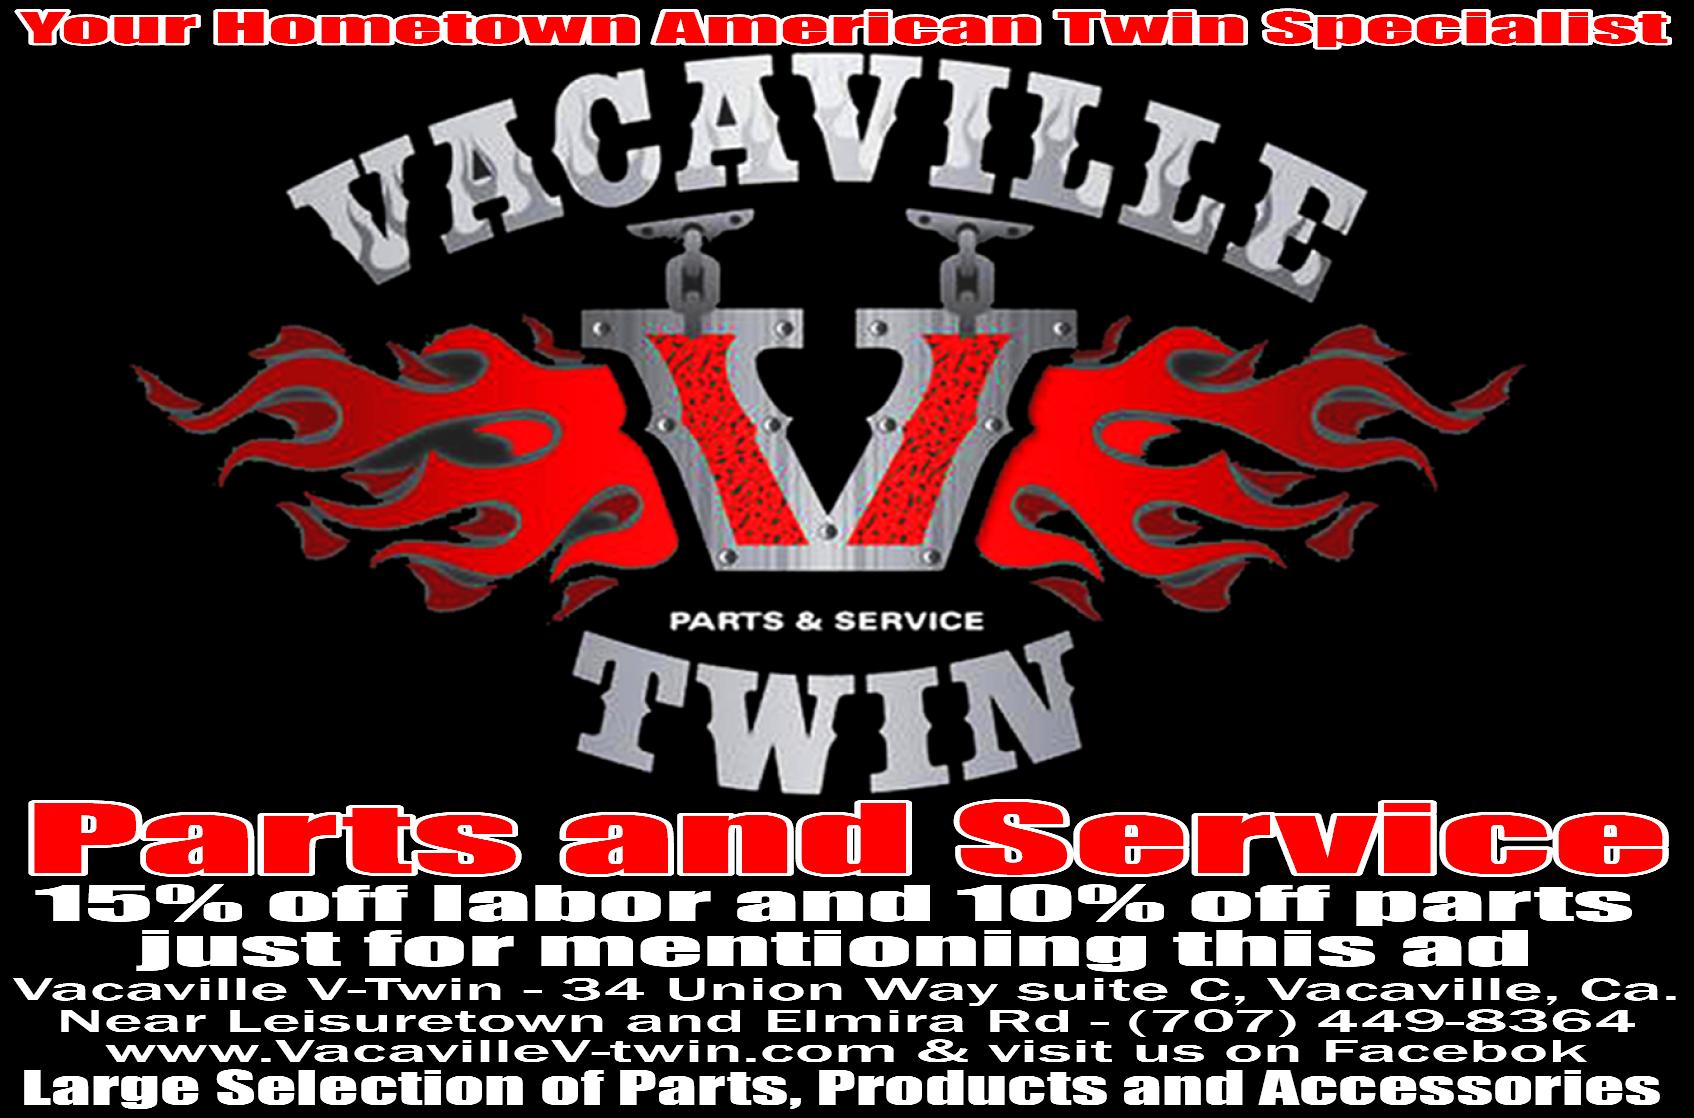 vacavillev-twin.com